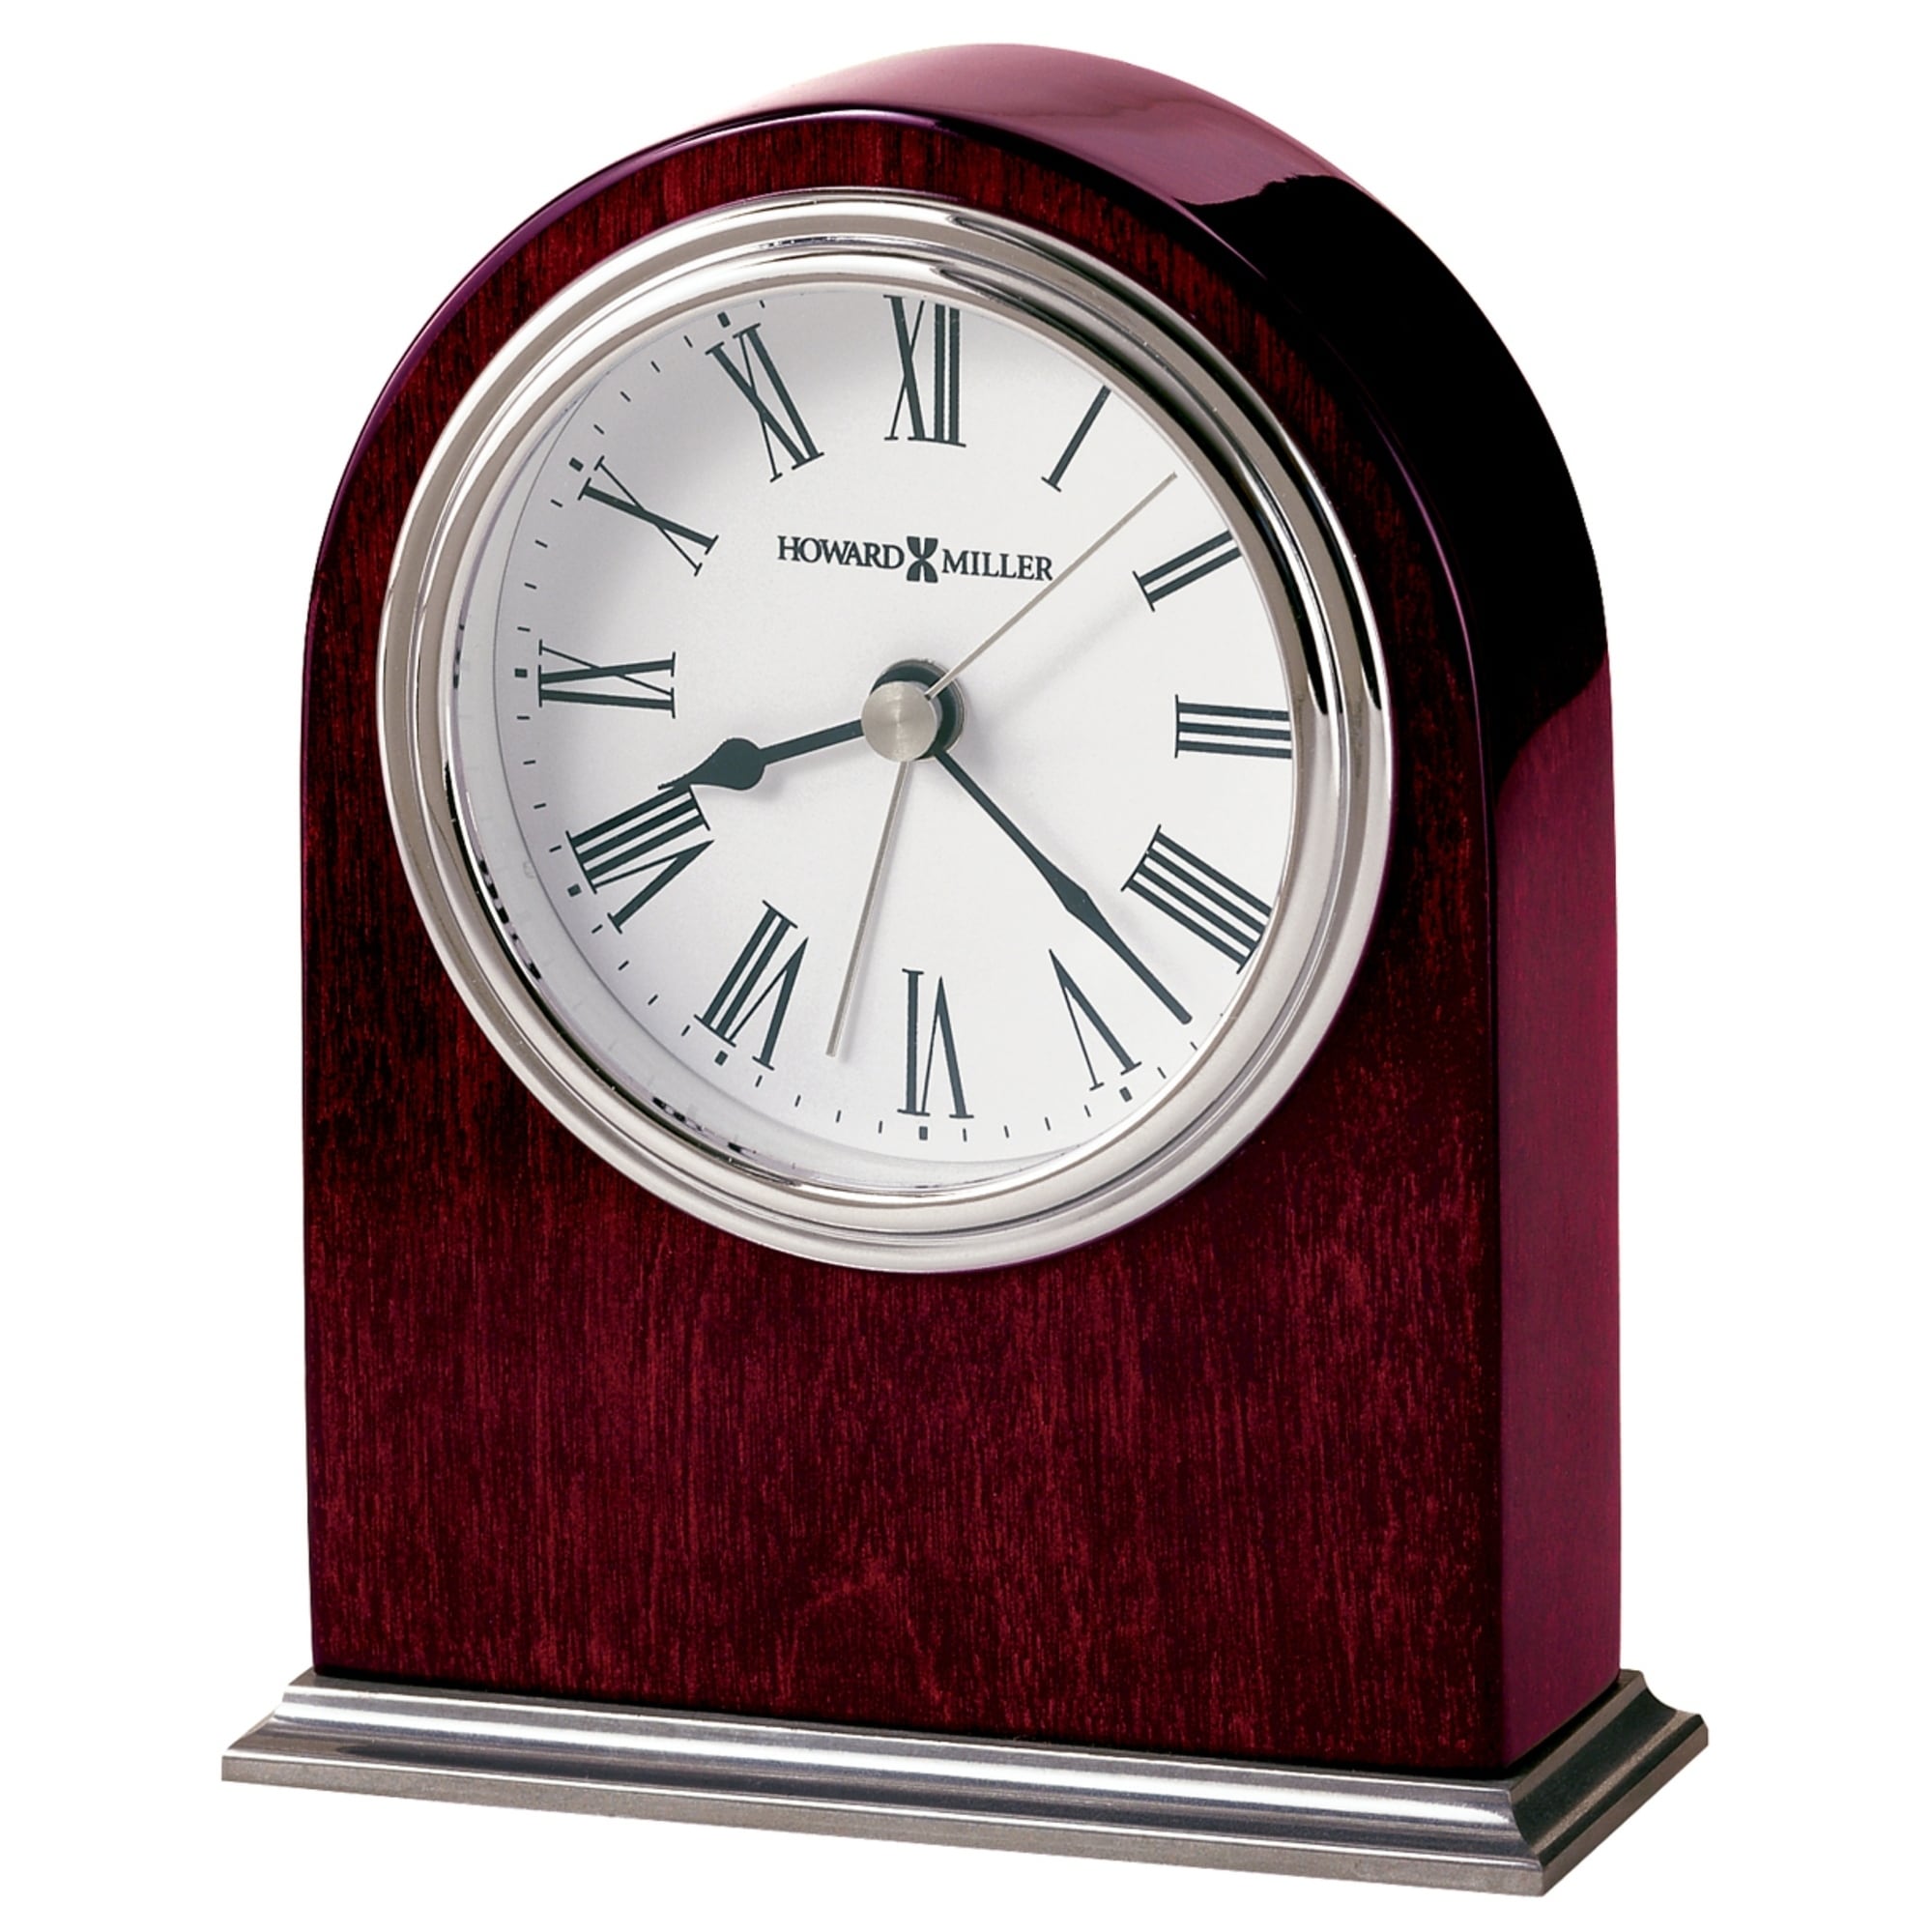 Mantel clocks, desk clocks, alarm clocks and wall clocks